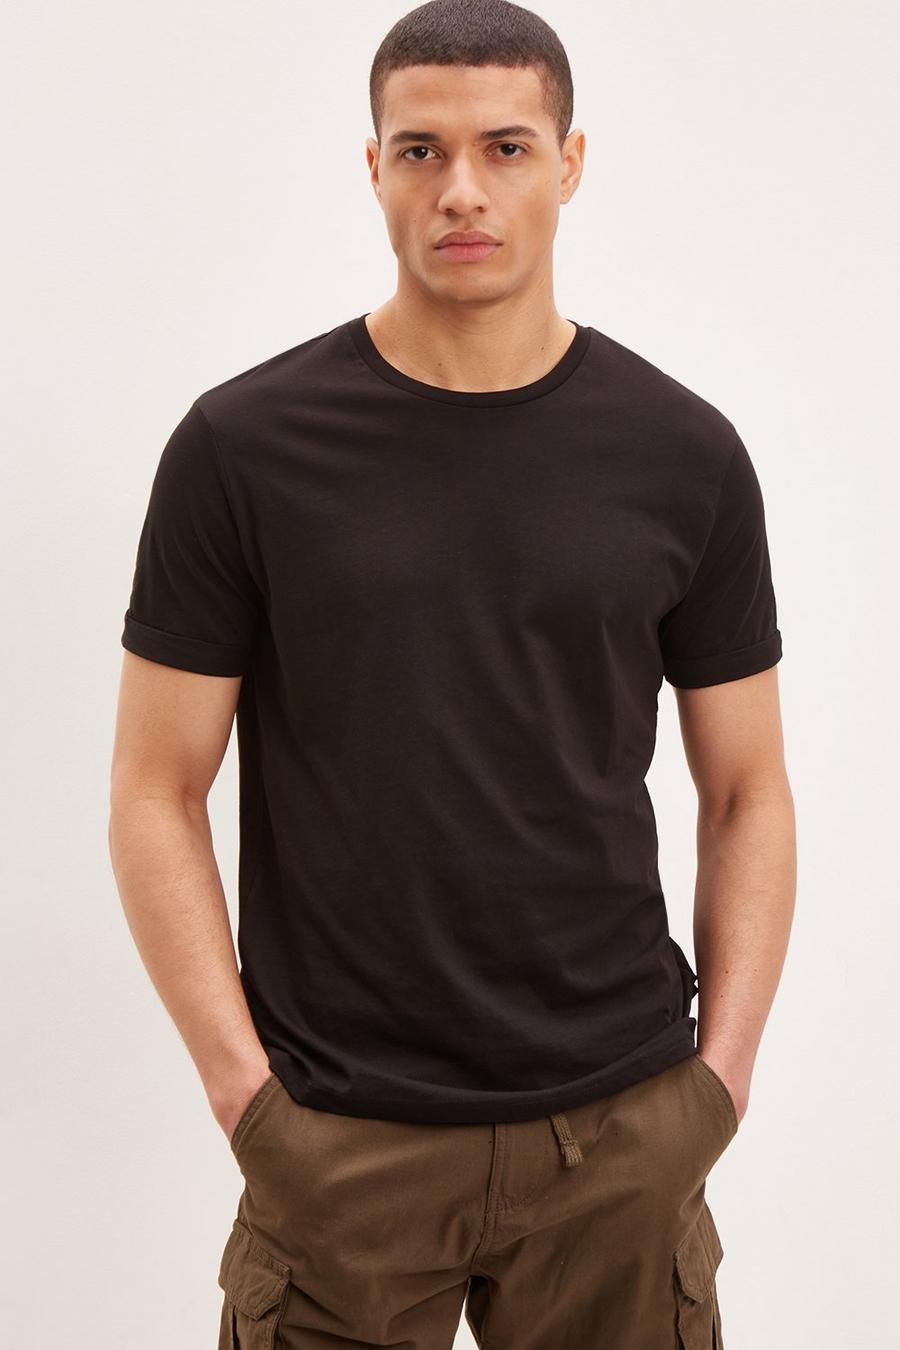 Roll Sleeve Black T Shirt